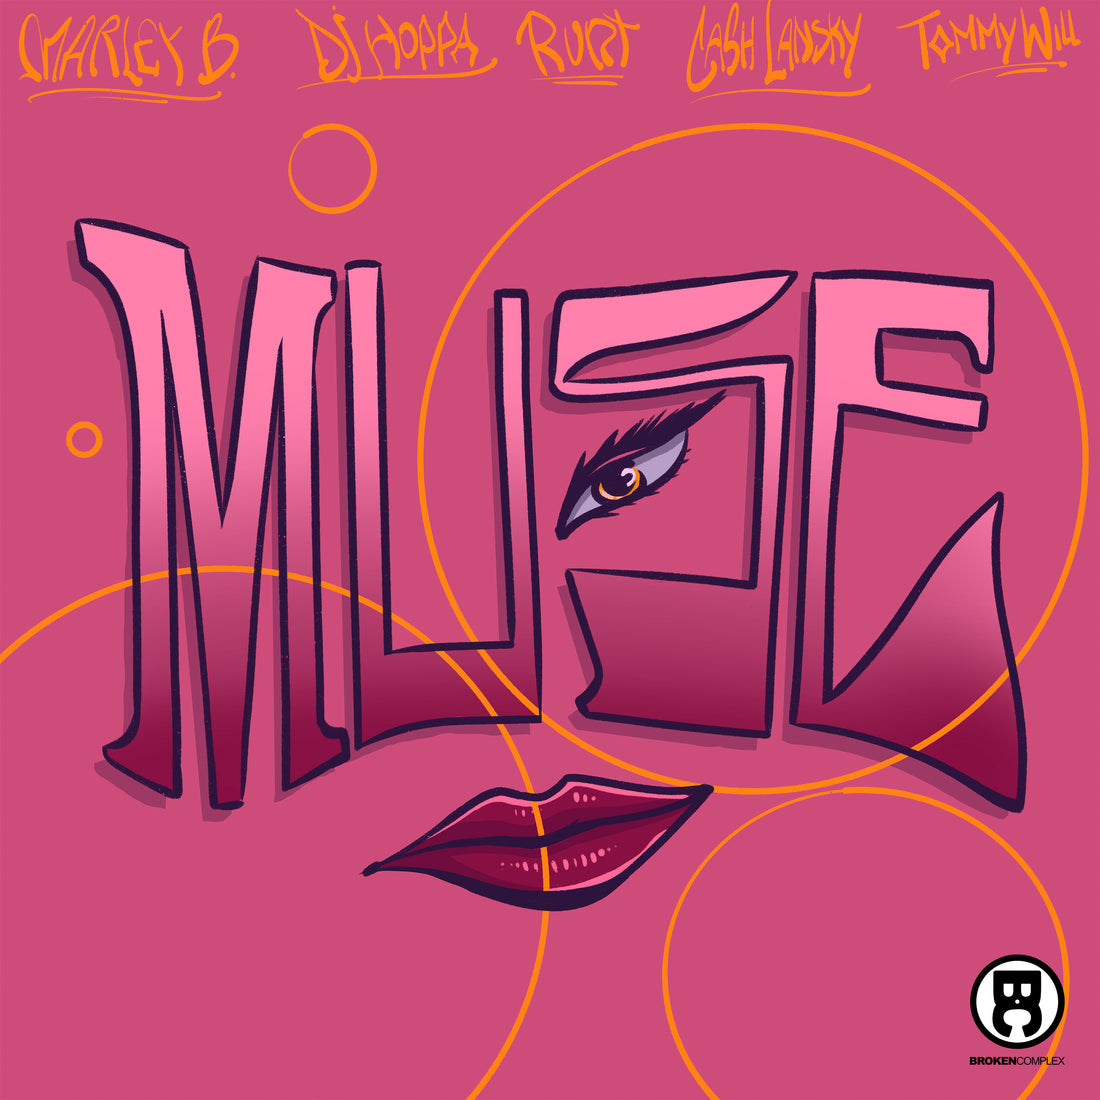 New Single: Marley B. & DJ Hoppa - Muse feat. Cash Lansky, Runt, Tommy Will